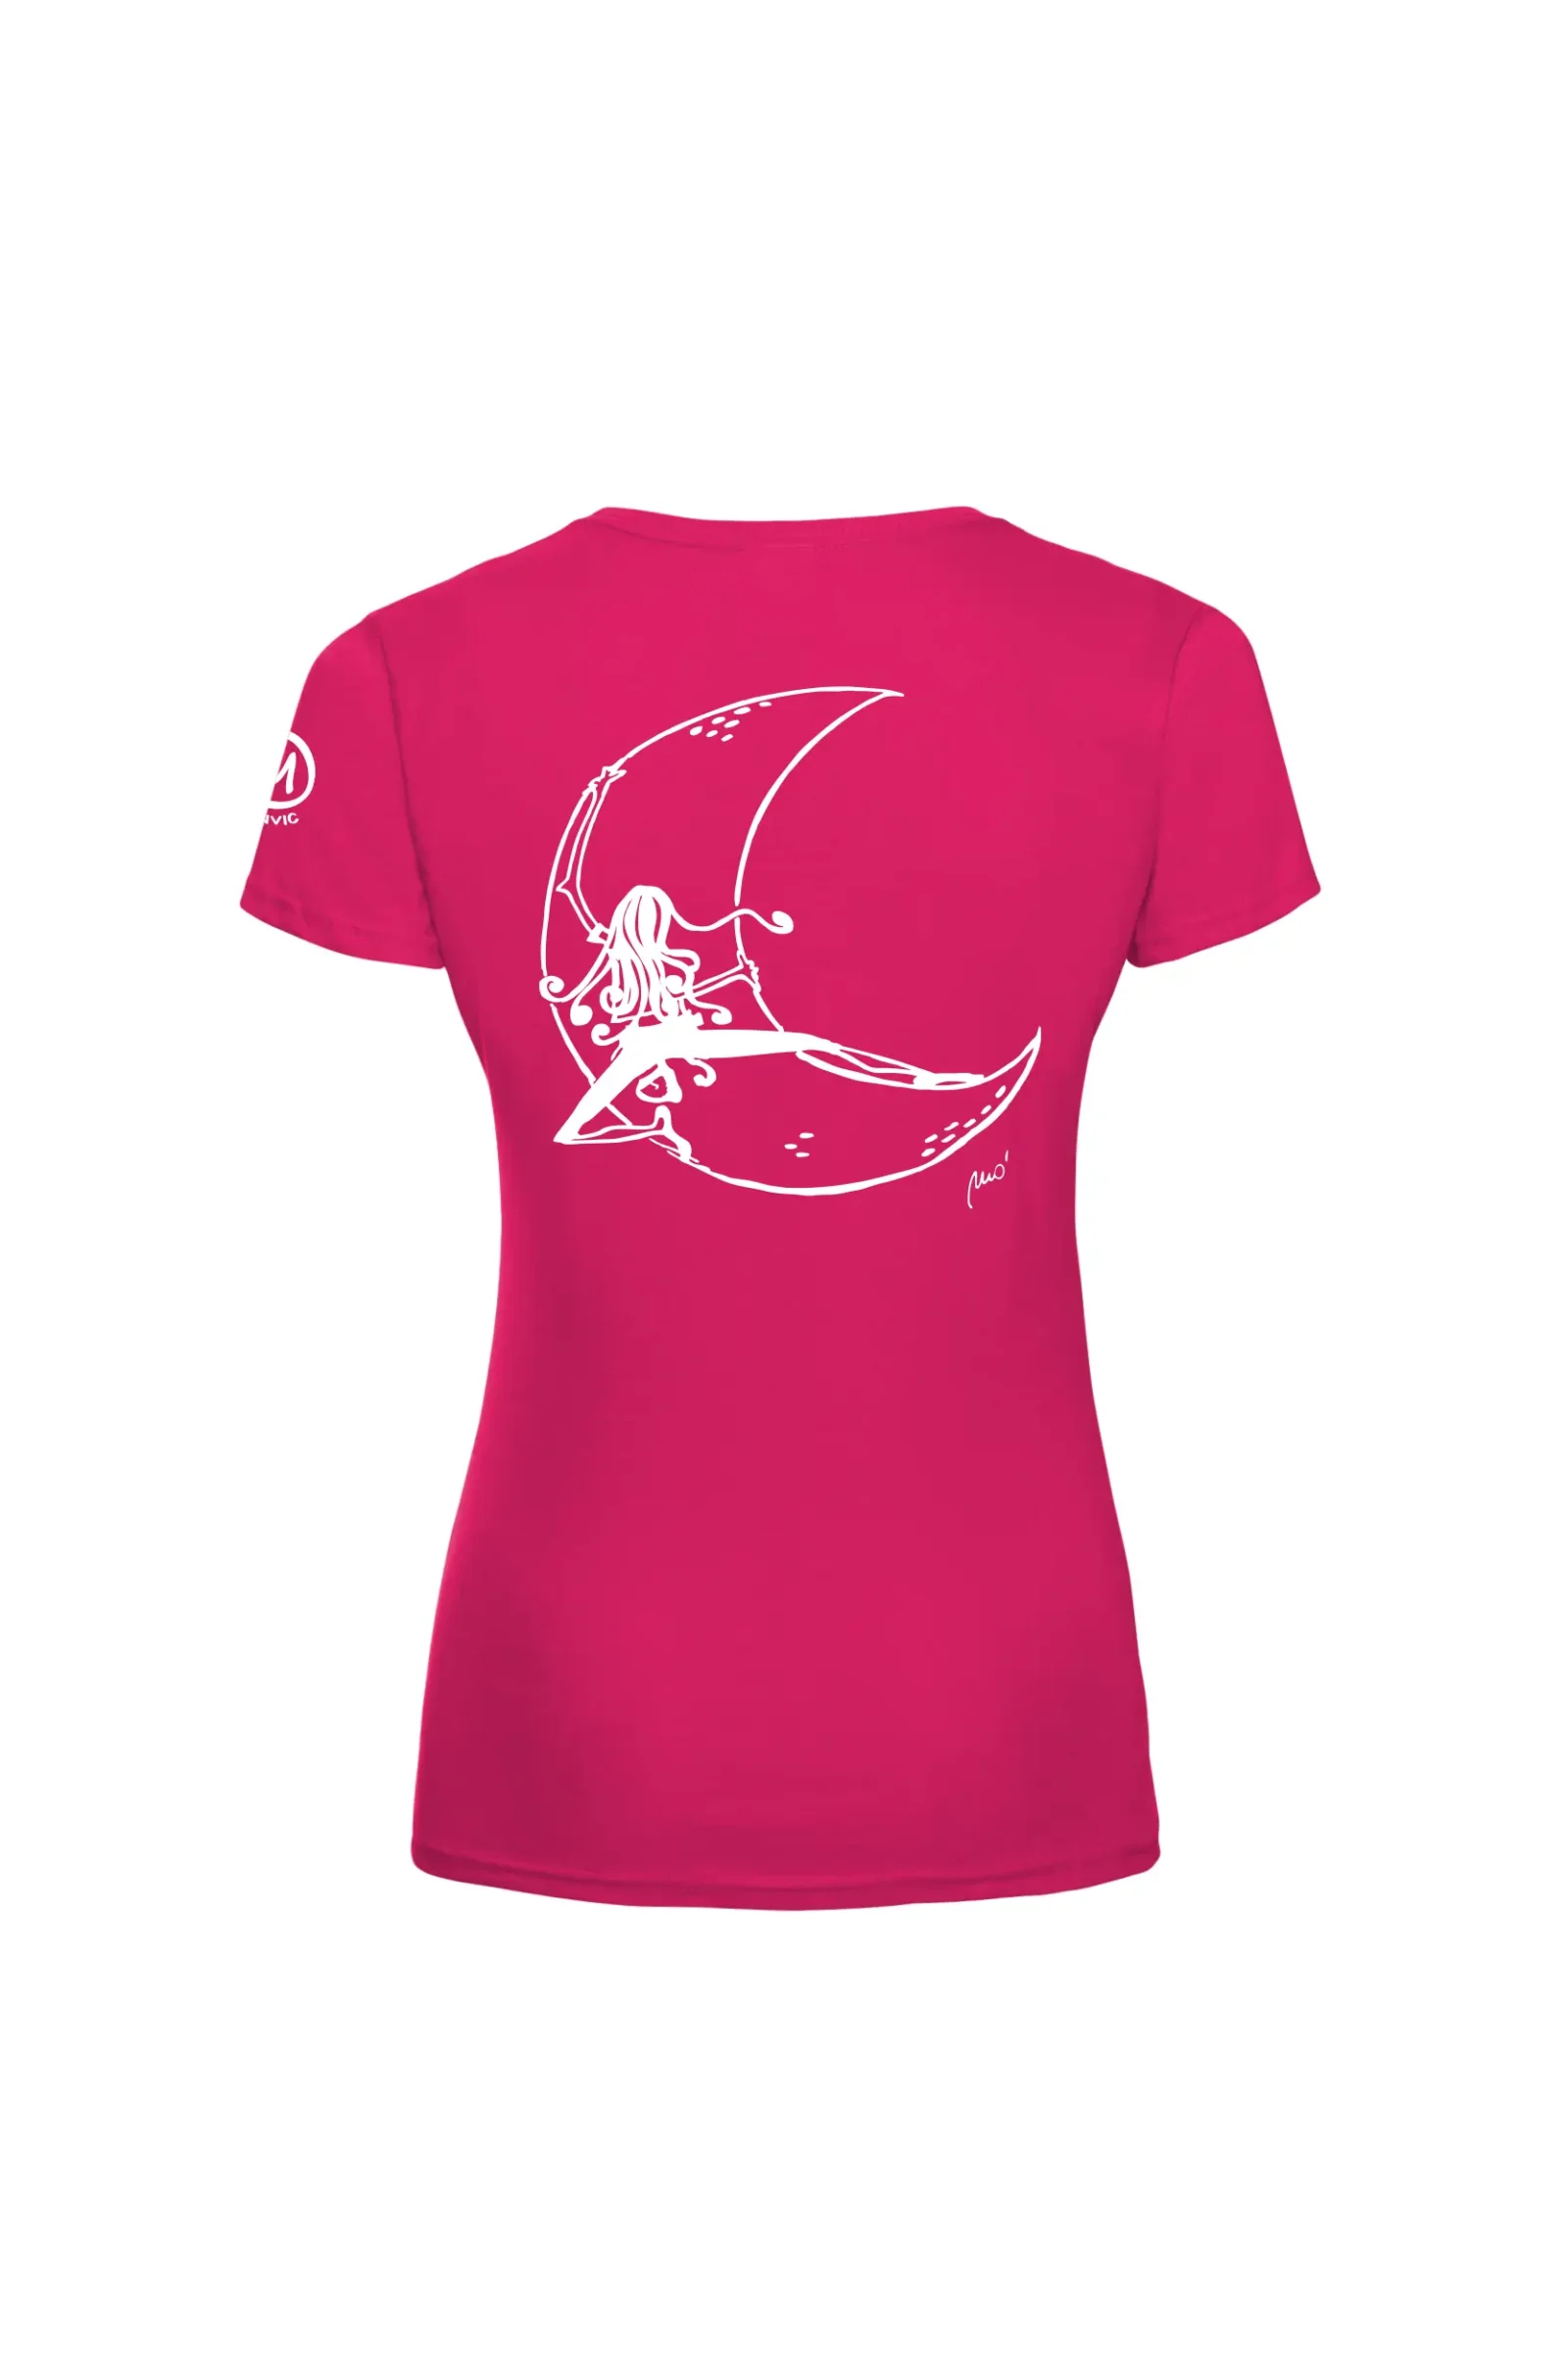 T-shirt escalade femme - coton fuchsia - Graphisme "Lune" - SHARON by MONVIC